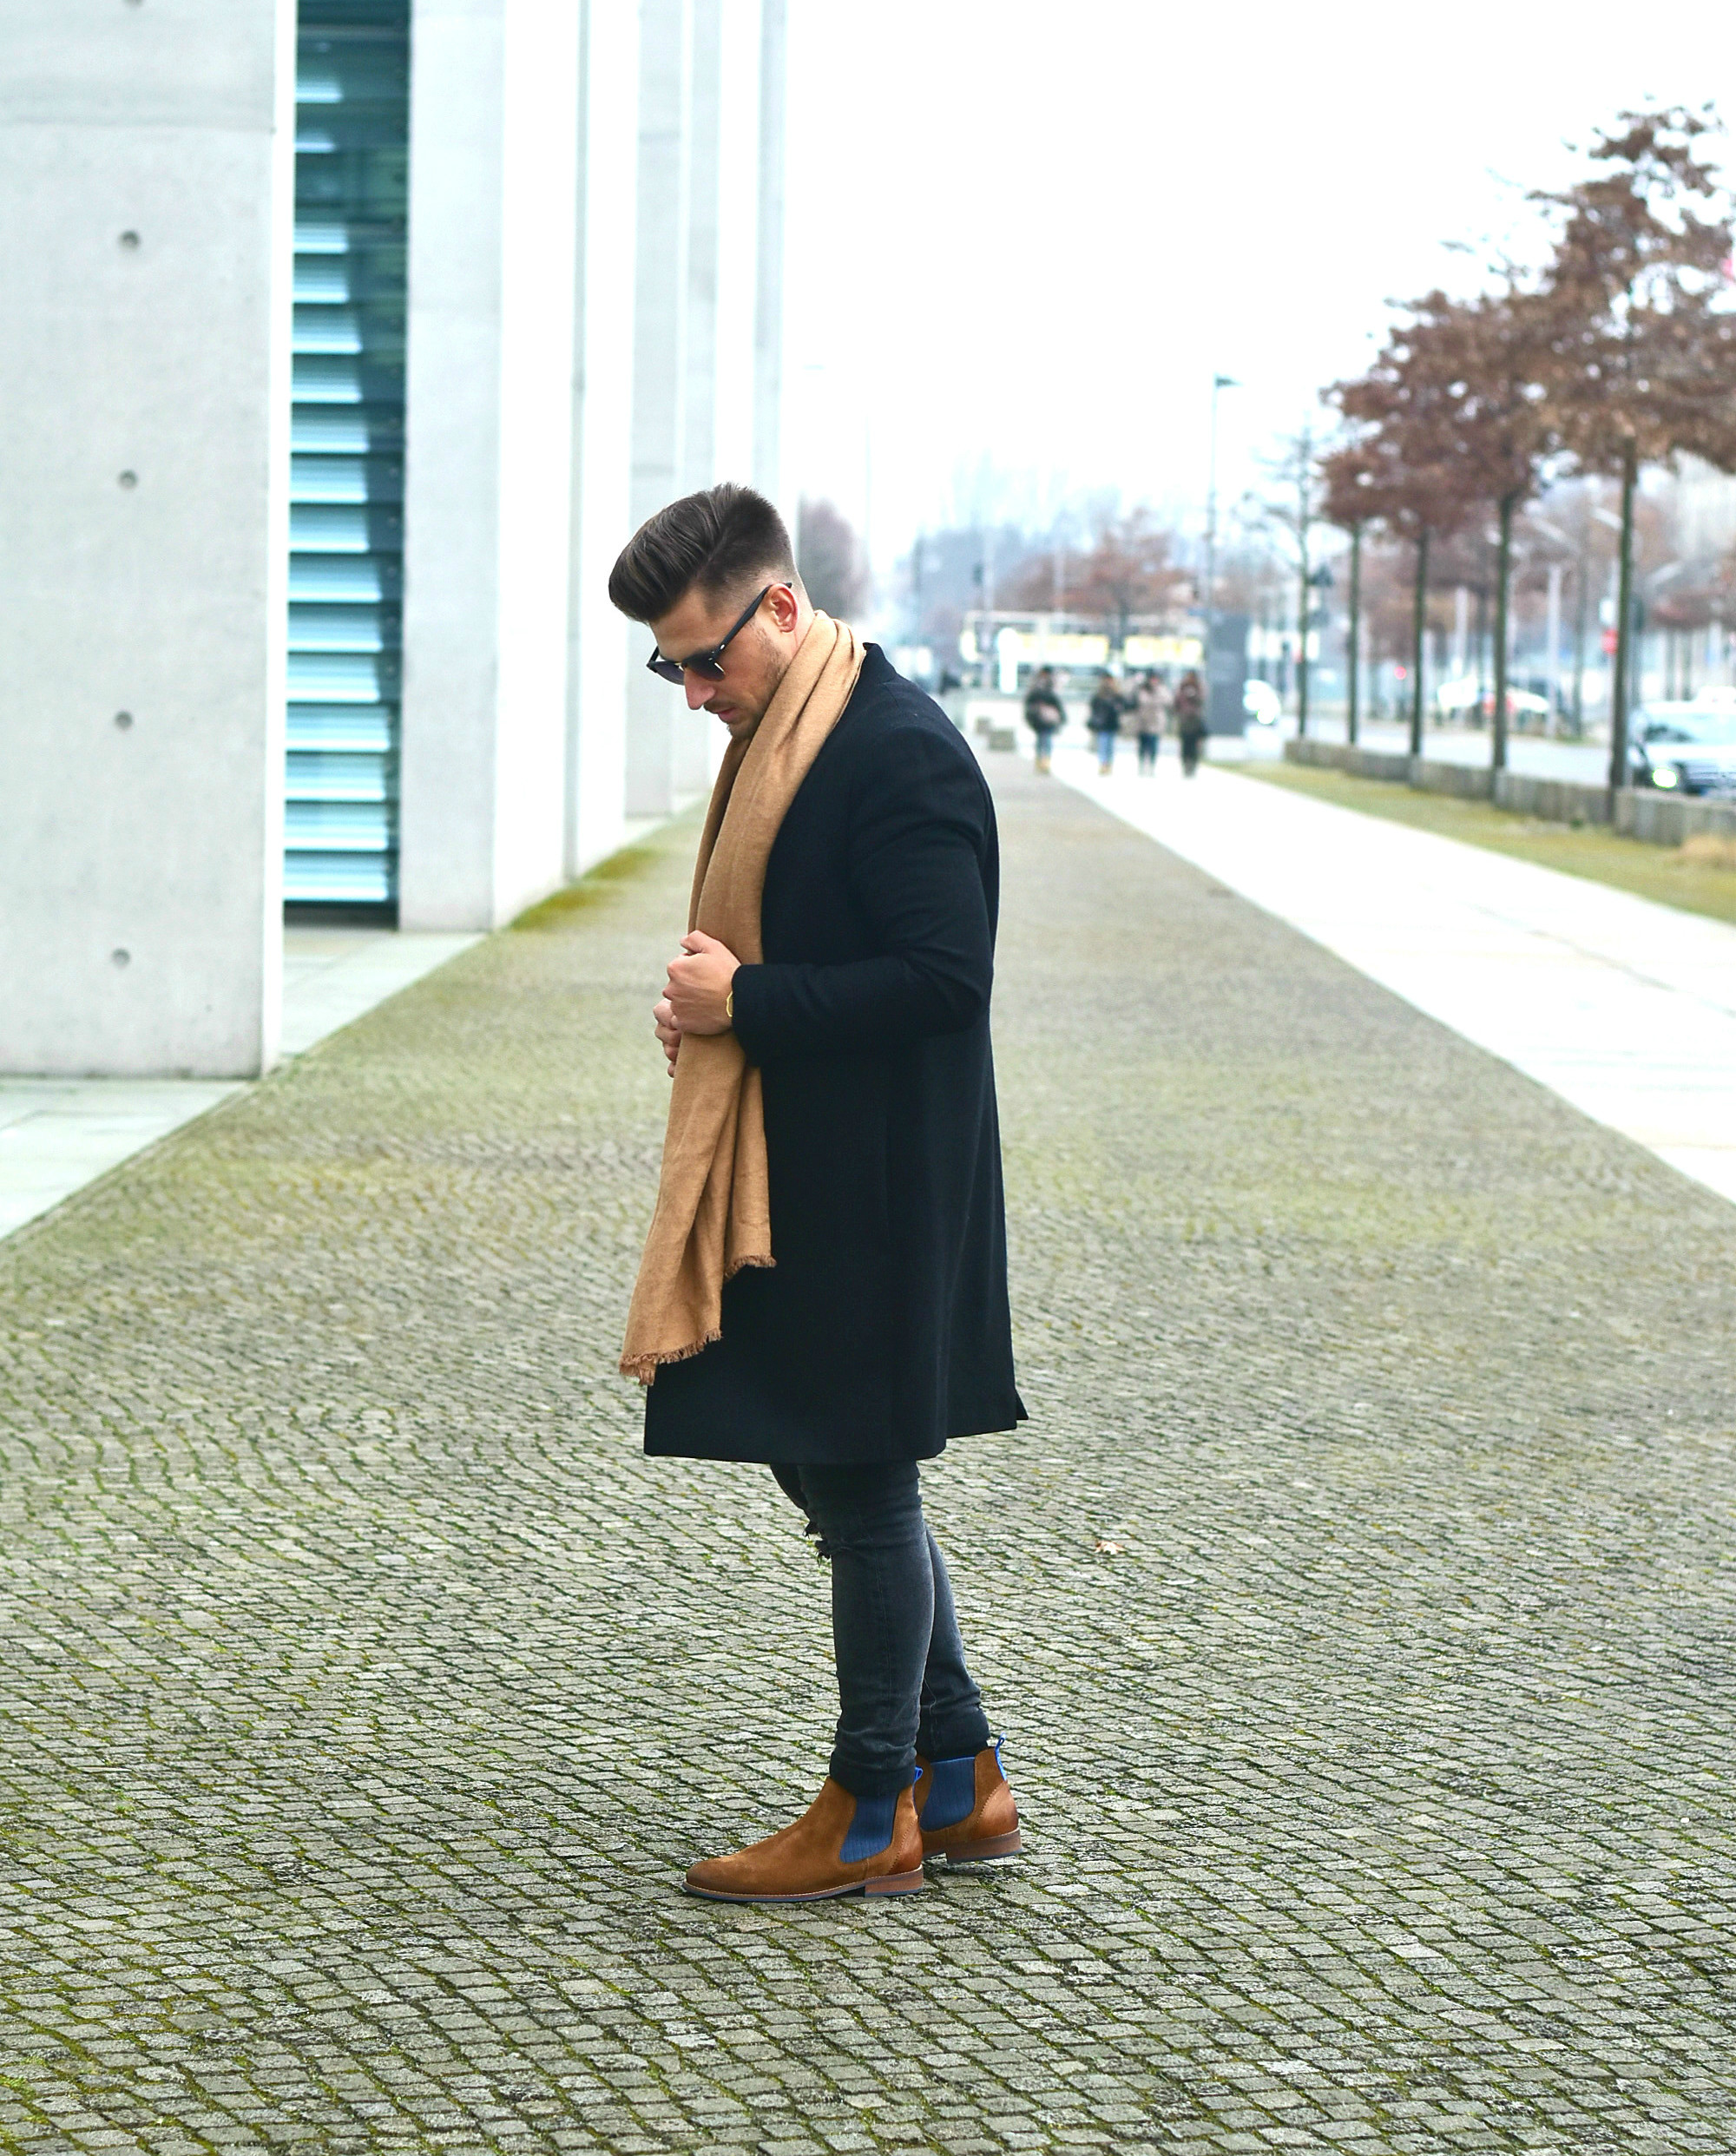 Styleblog-Männerblog-Modeblog-Berlin-Mantel-Coat-Chelseaboots-Smart-Look-Männermode-Streetwear